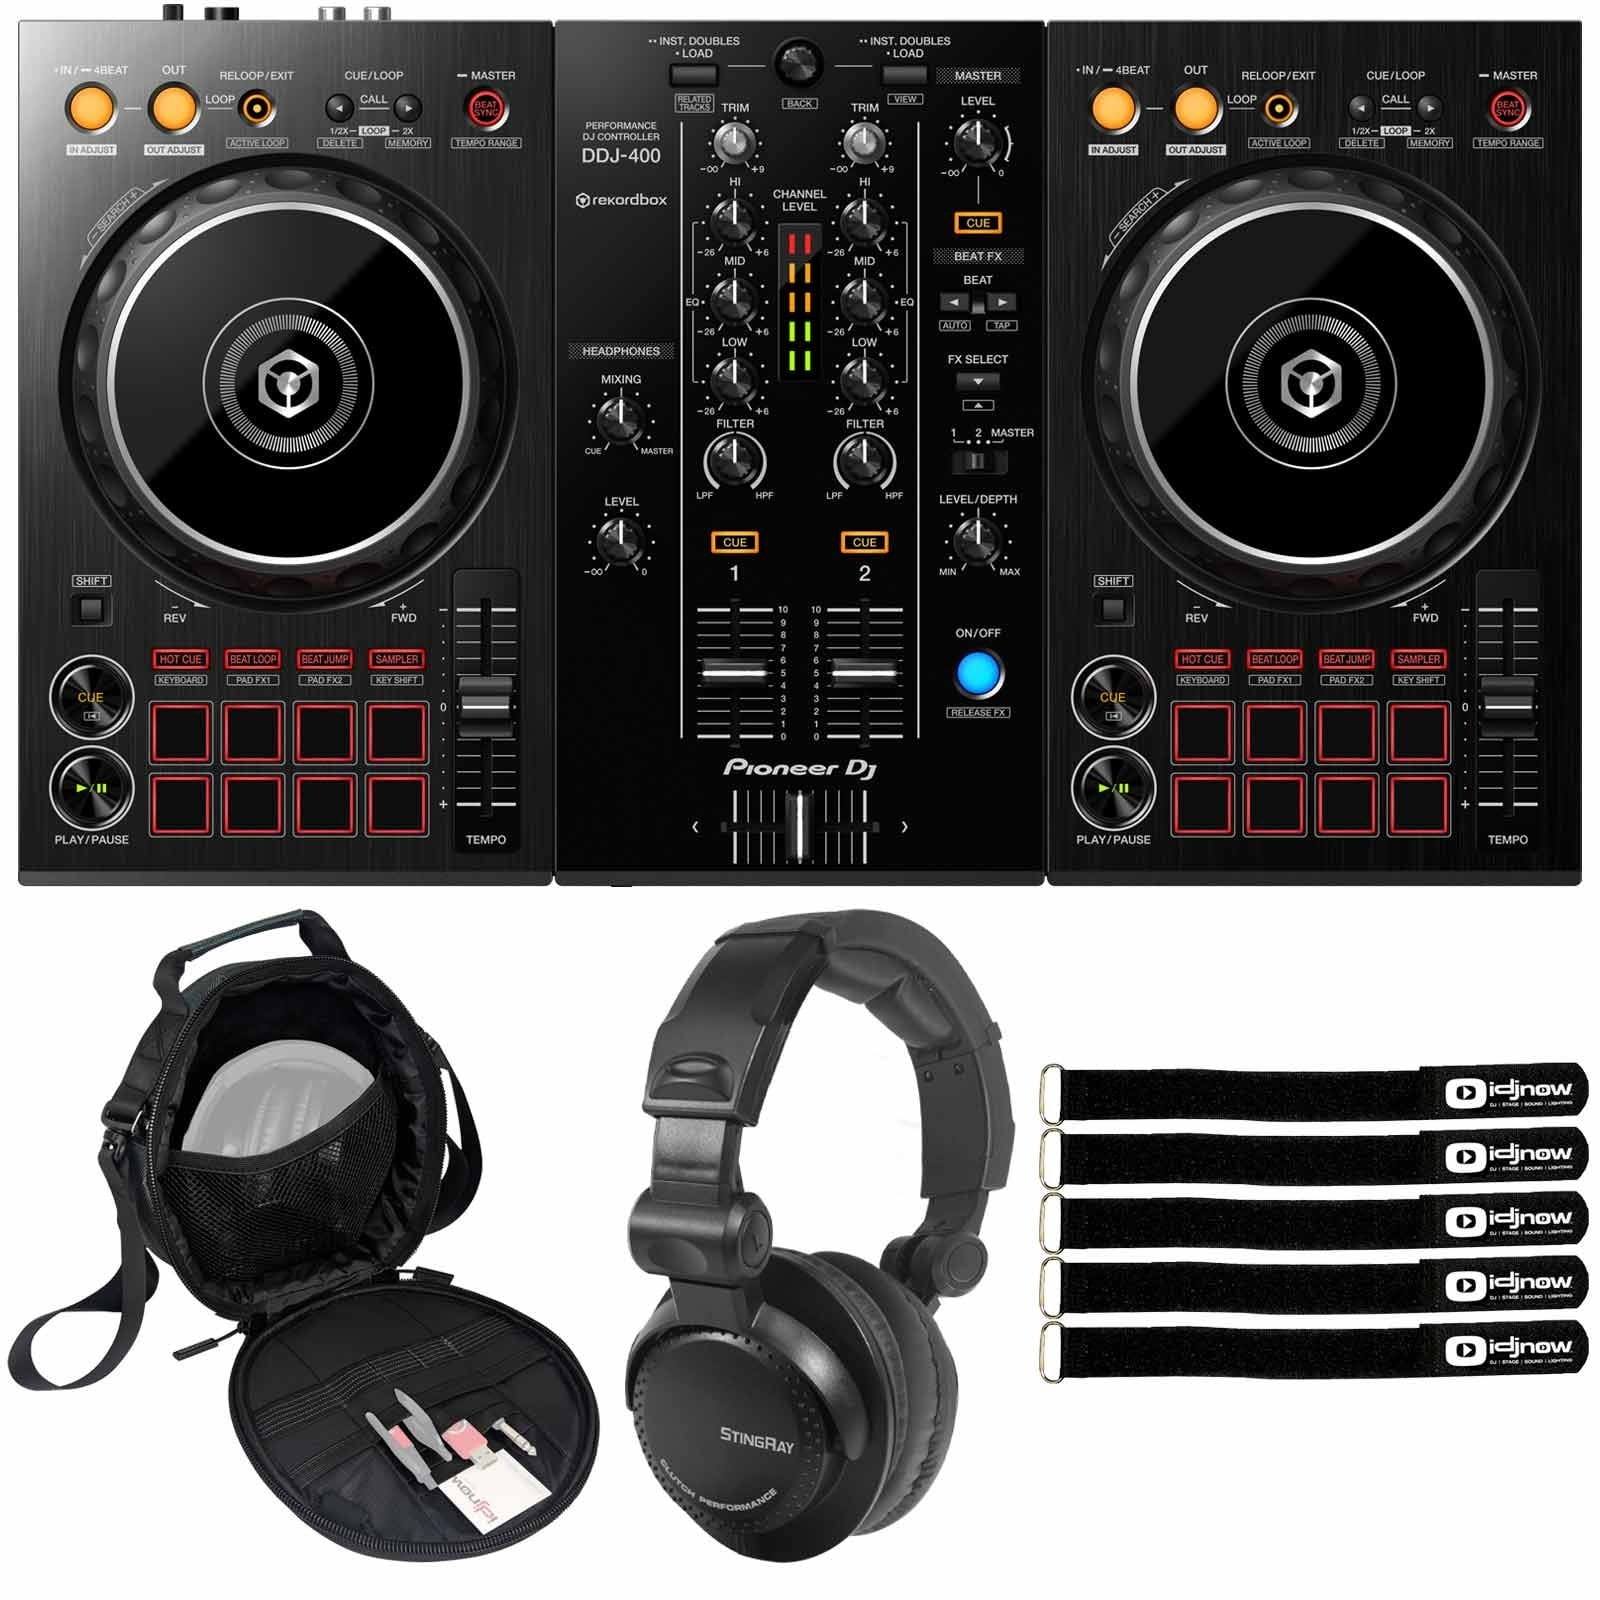 Pioneer DJ DDJ-400 2-channel rekordbox DJ Controller with